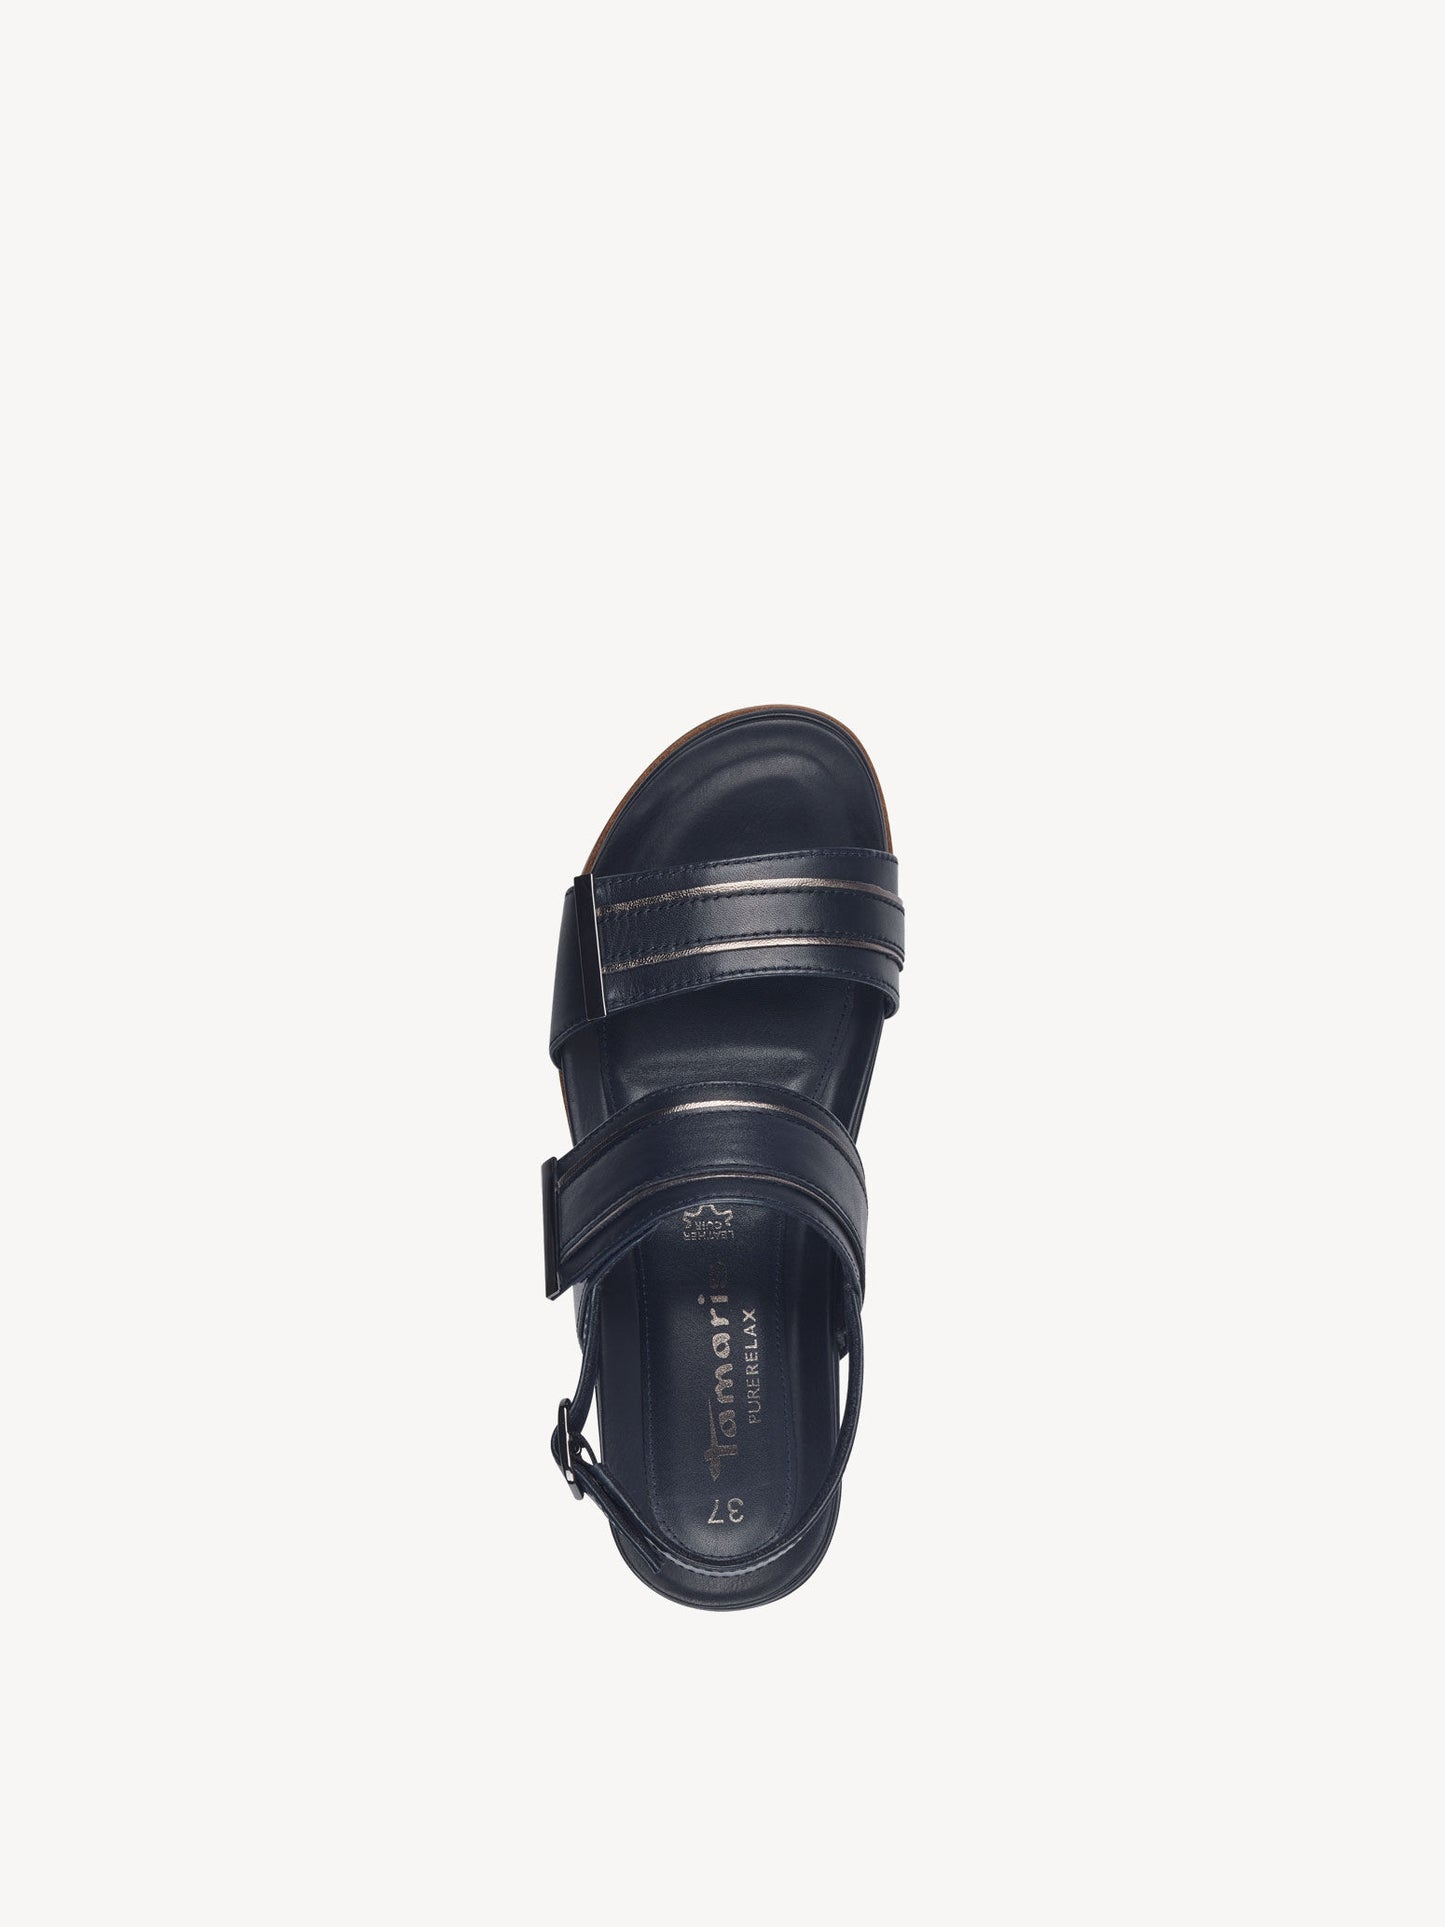 Tamaris Women's 1-28217-42 Leather Heeled Sandals Navy Blue